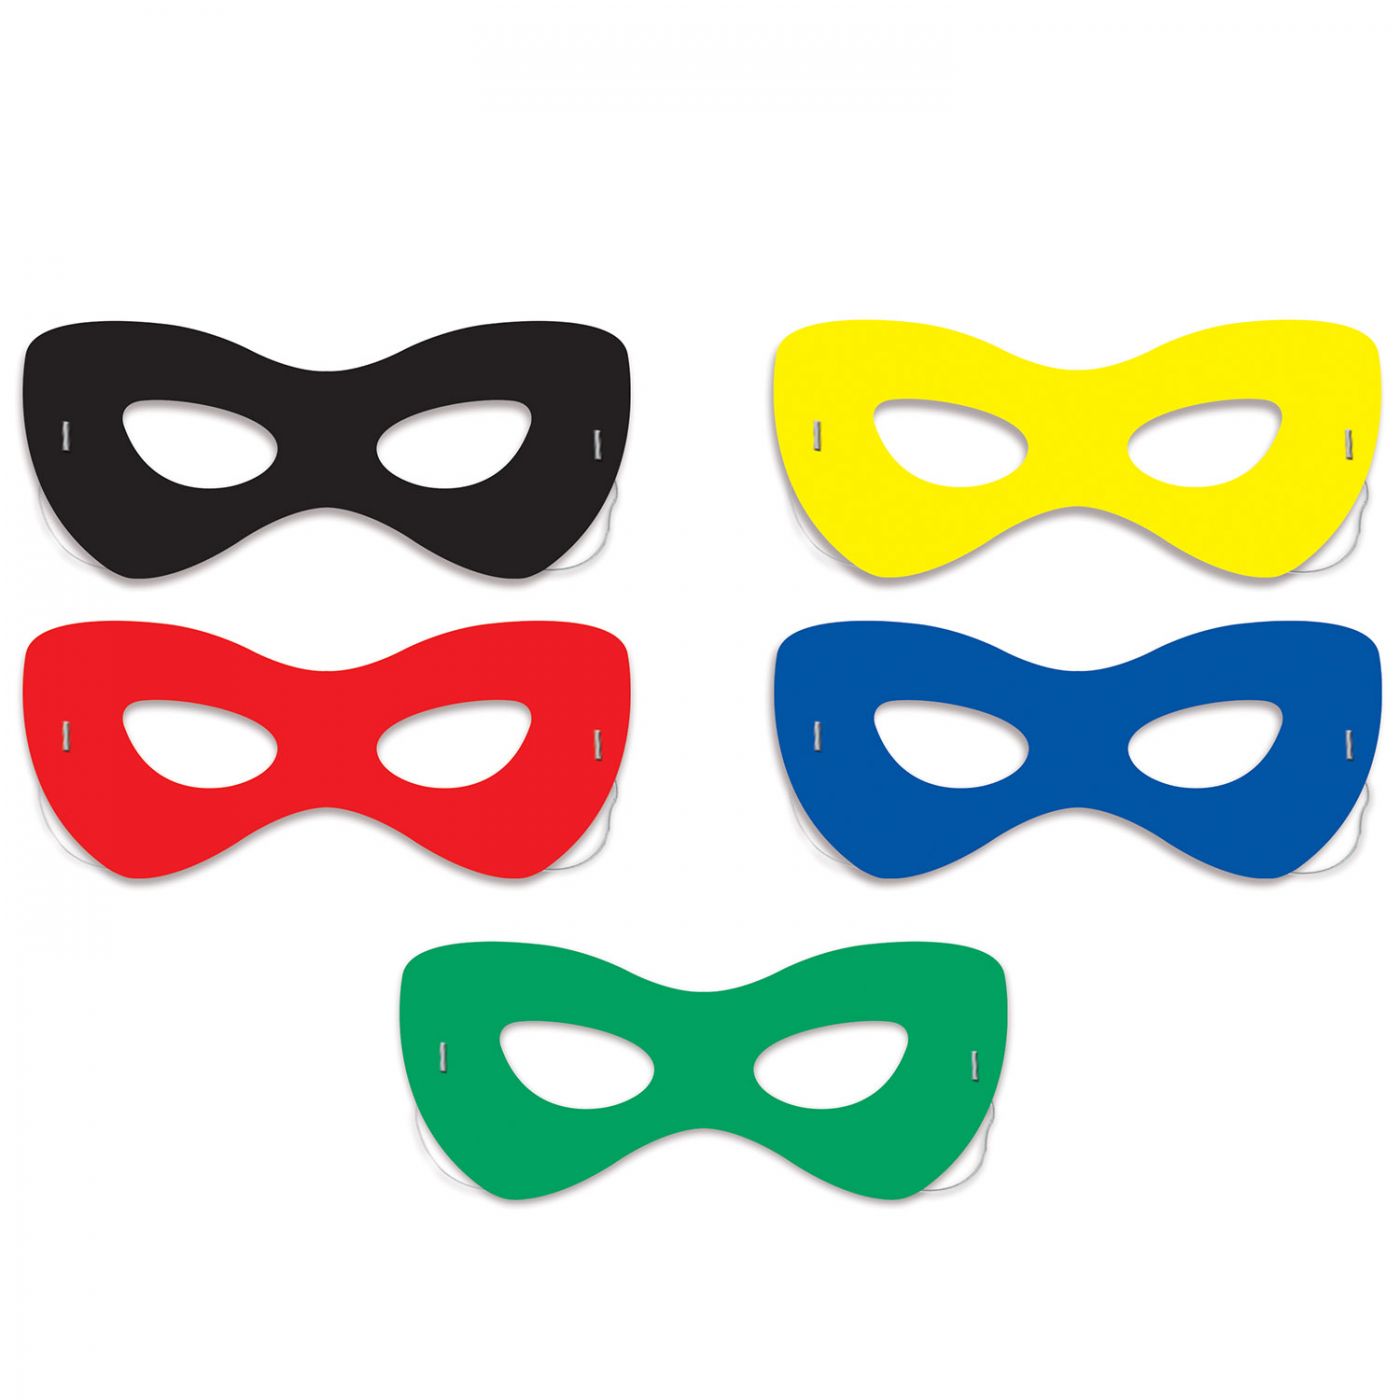 Hero Half Masks image